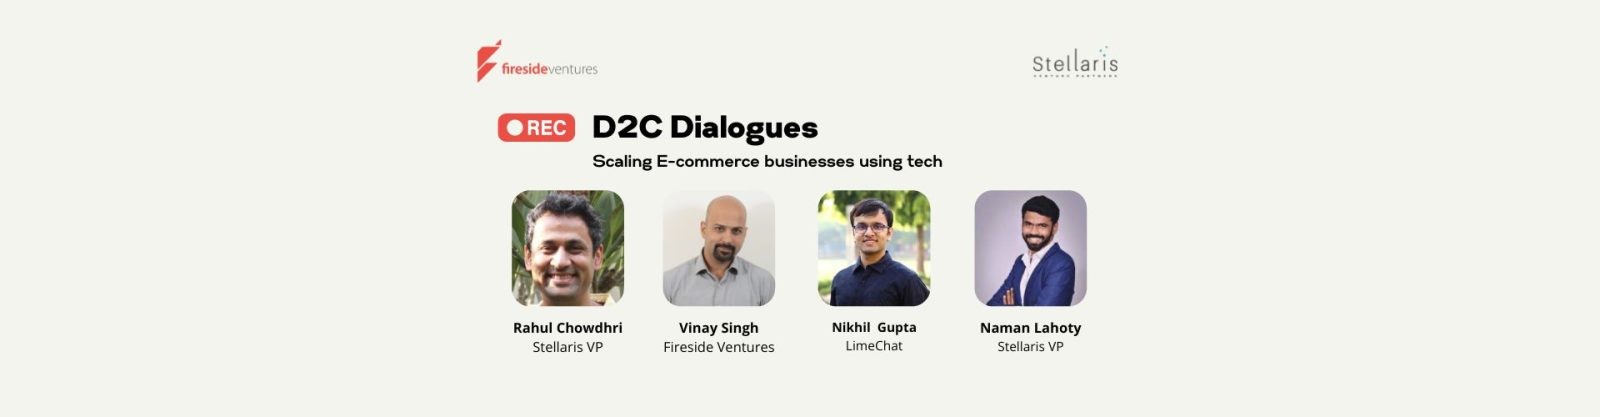 D2C Dialogues #1: Scaling E-commerce businesses using tech